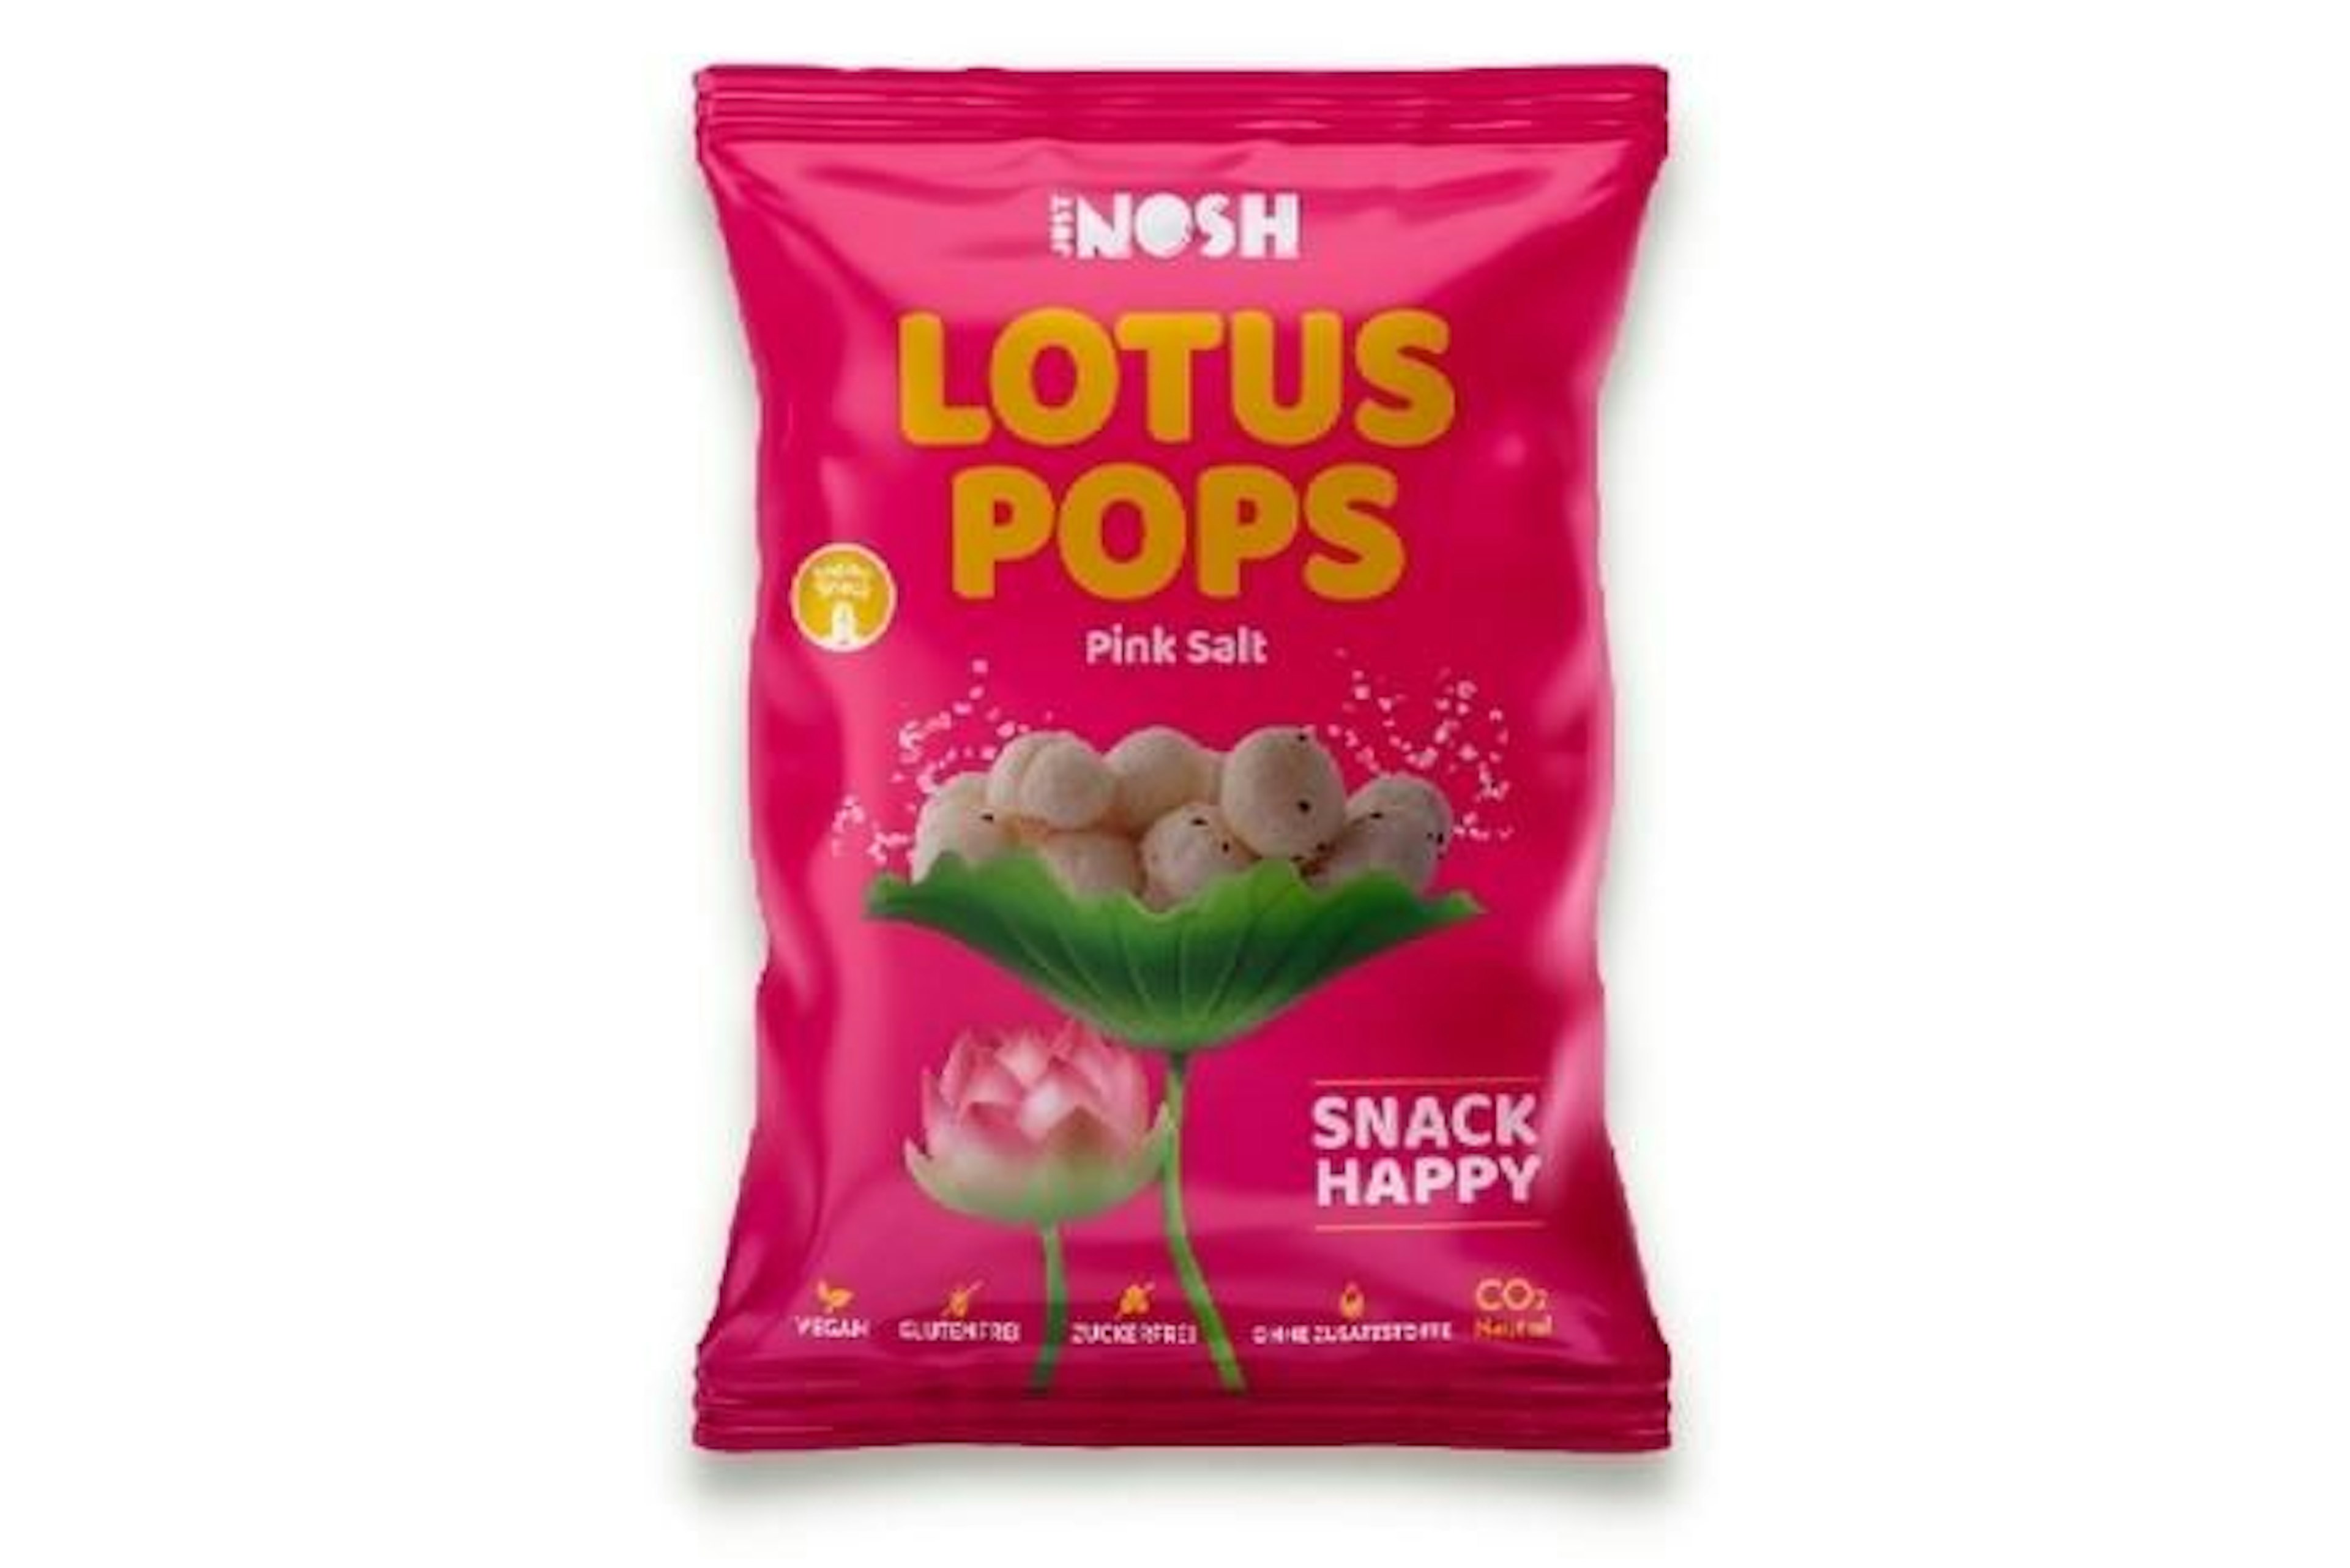 Pink Salt Lotus Pops